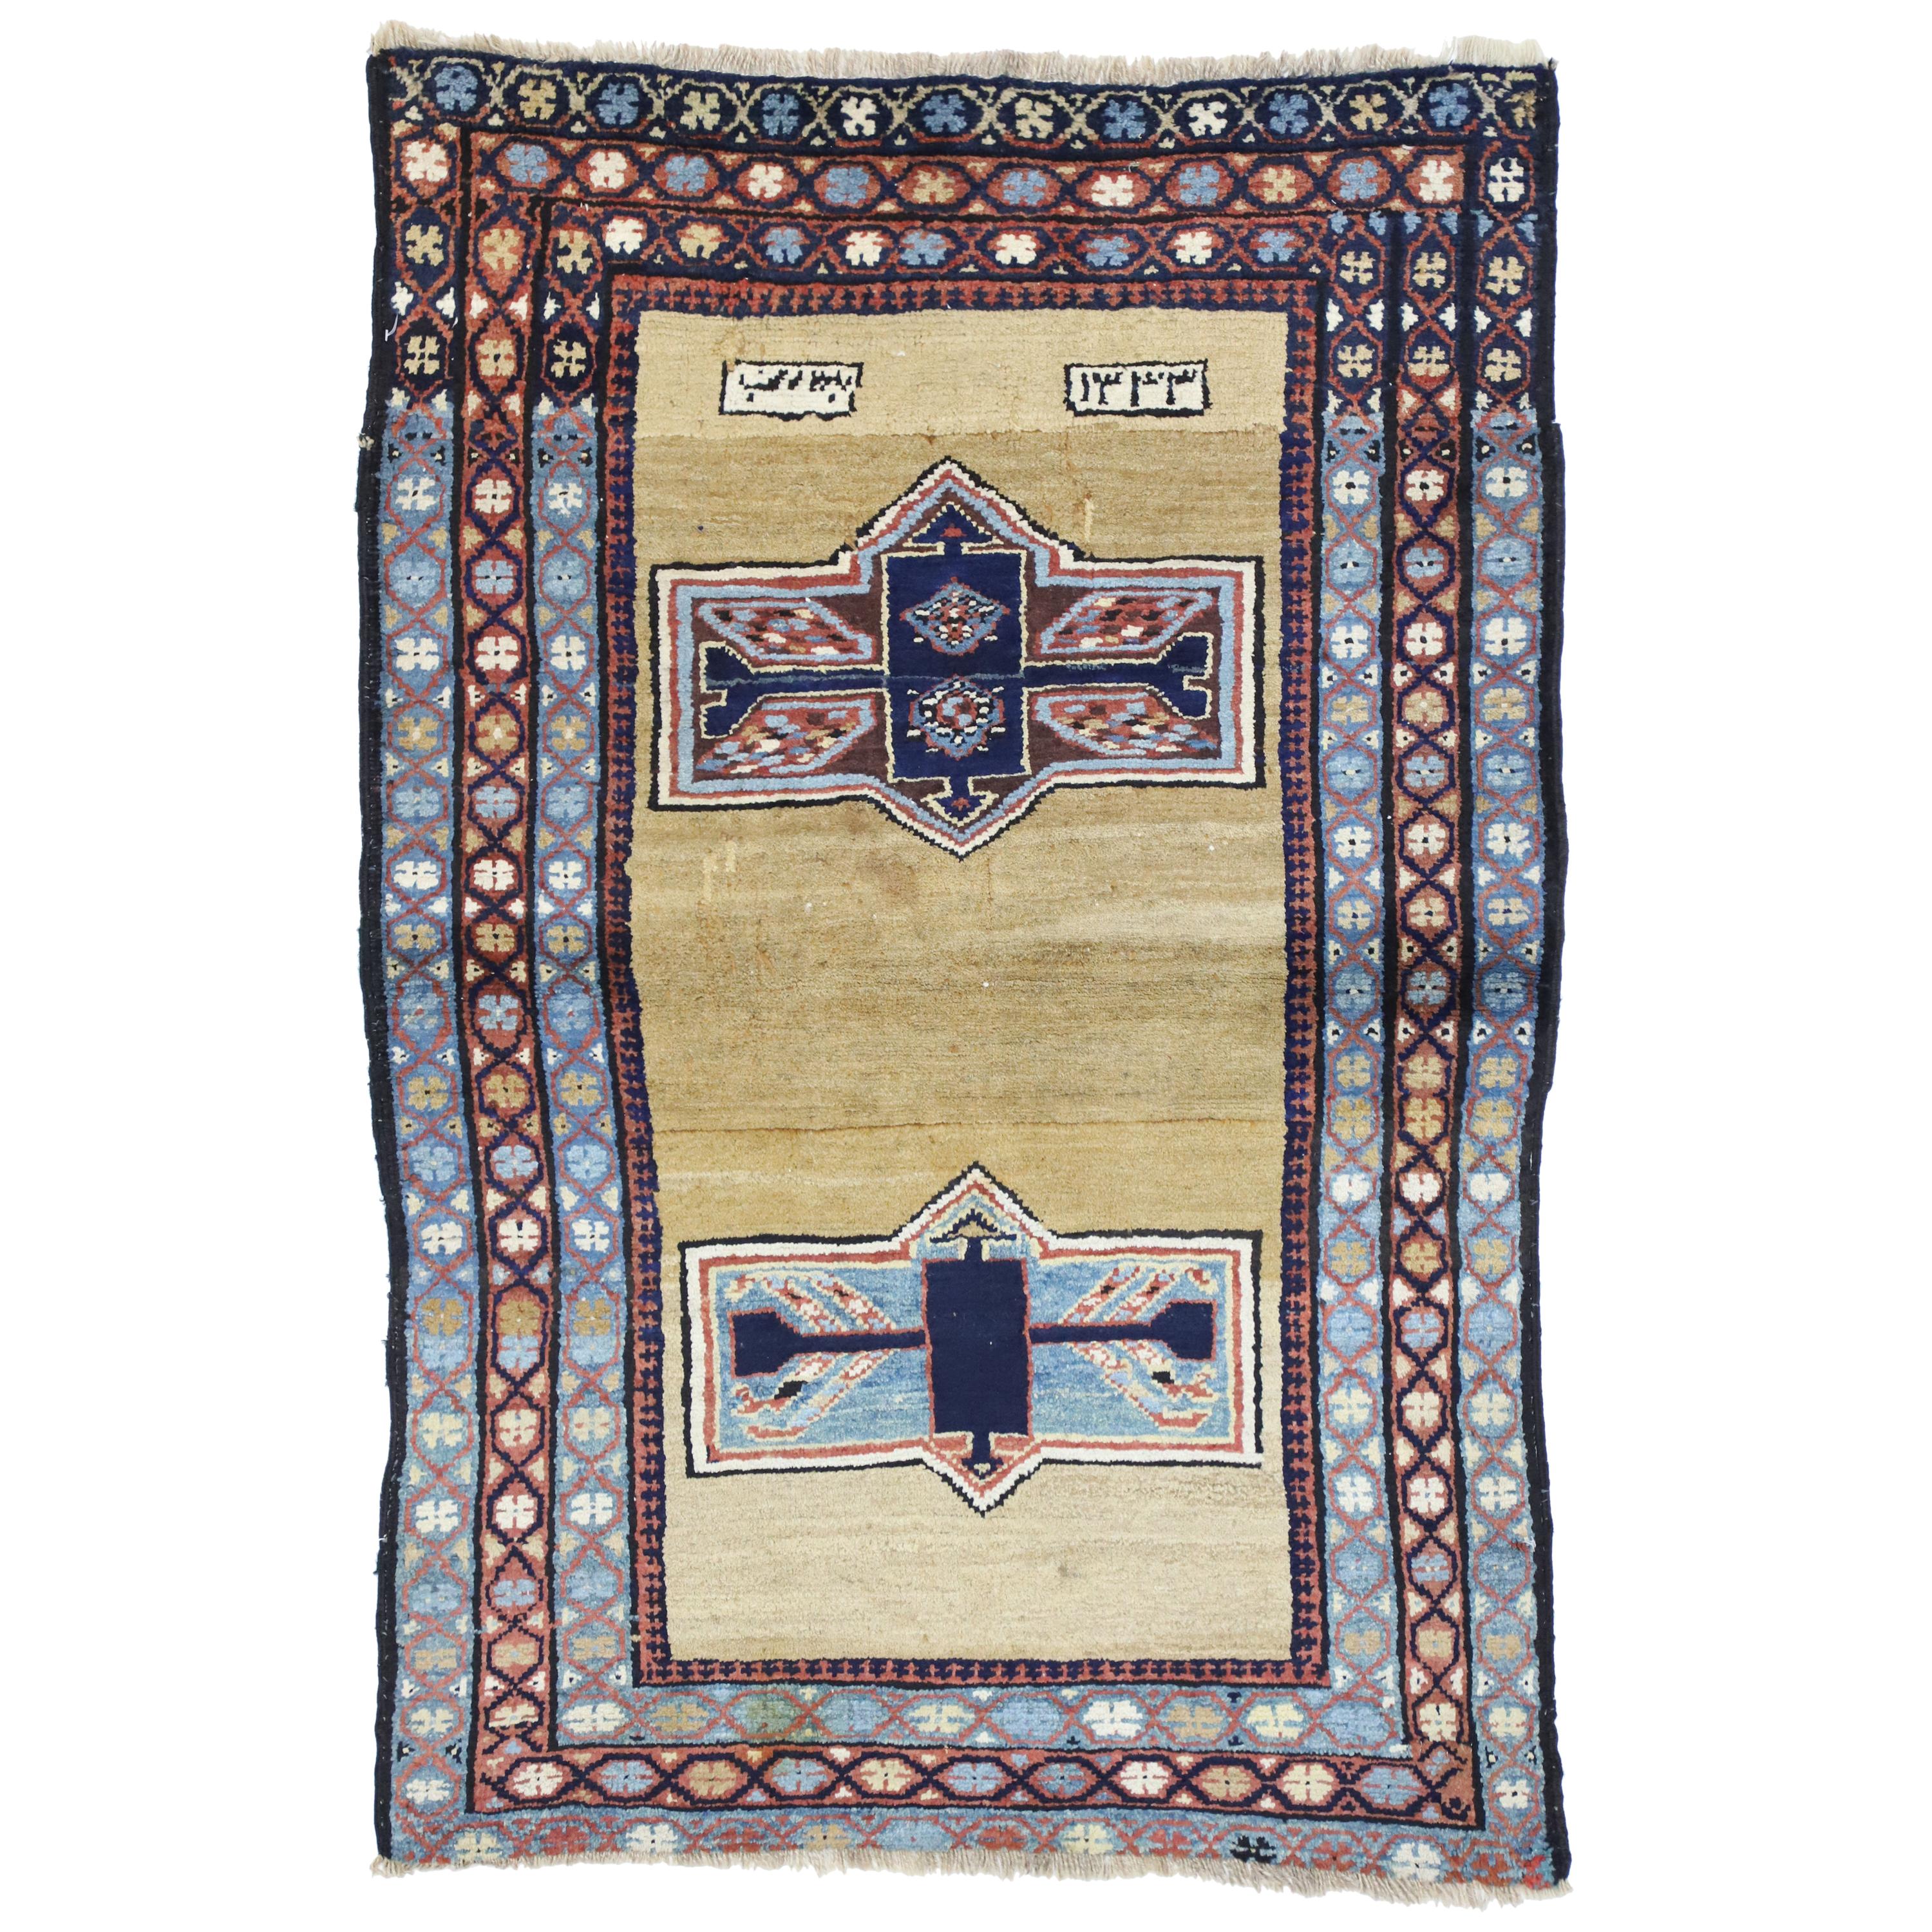 Antique Persian Azerbaijan Rug with Tribal Mid-Century Modern Style